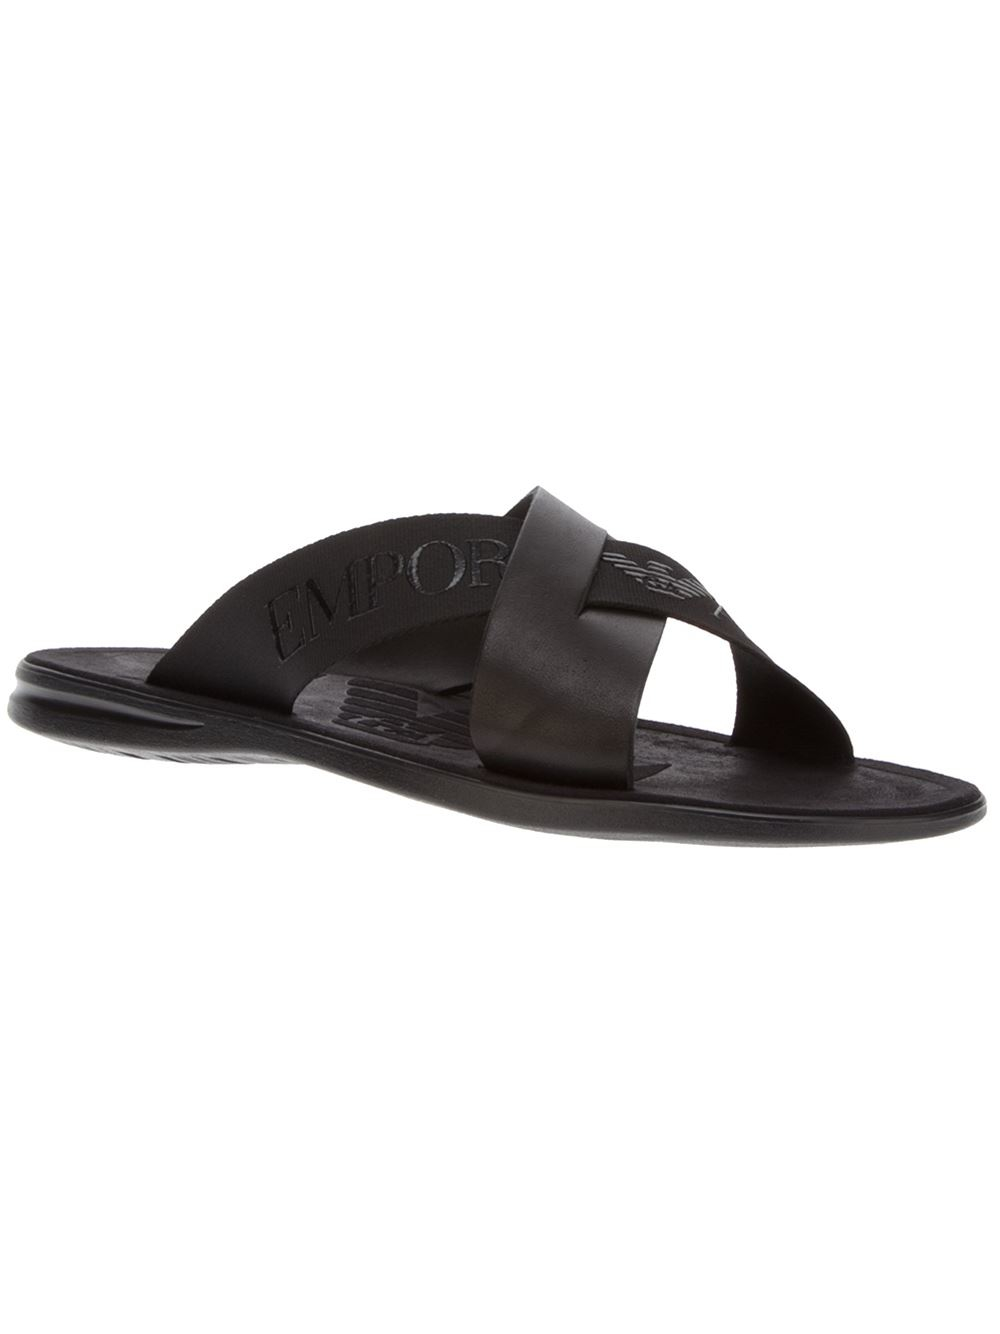 Emporio Armani Leather Calfskin Sandals in Black for Men - Lyst